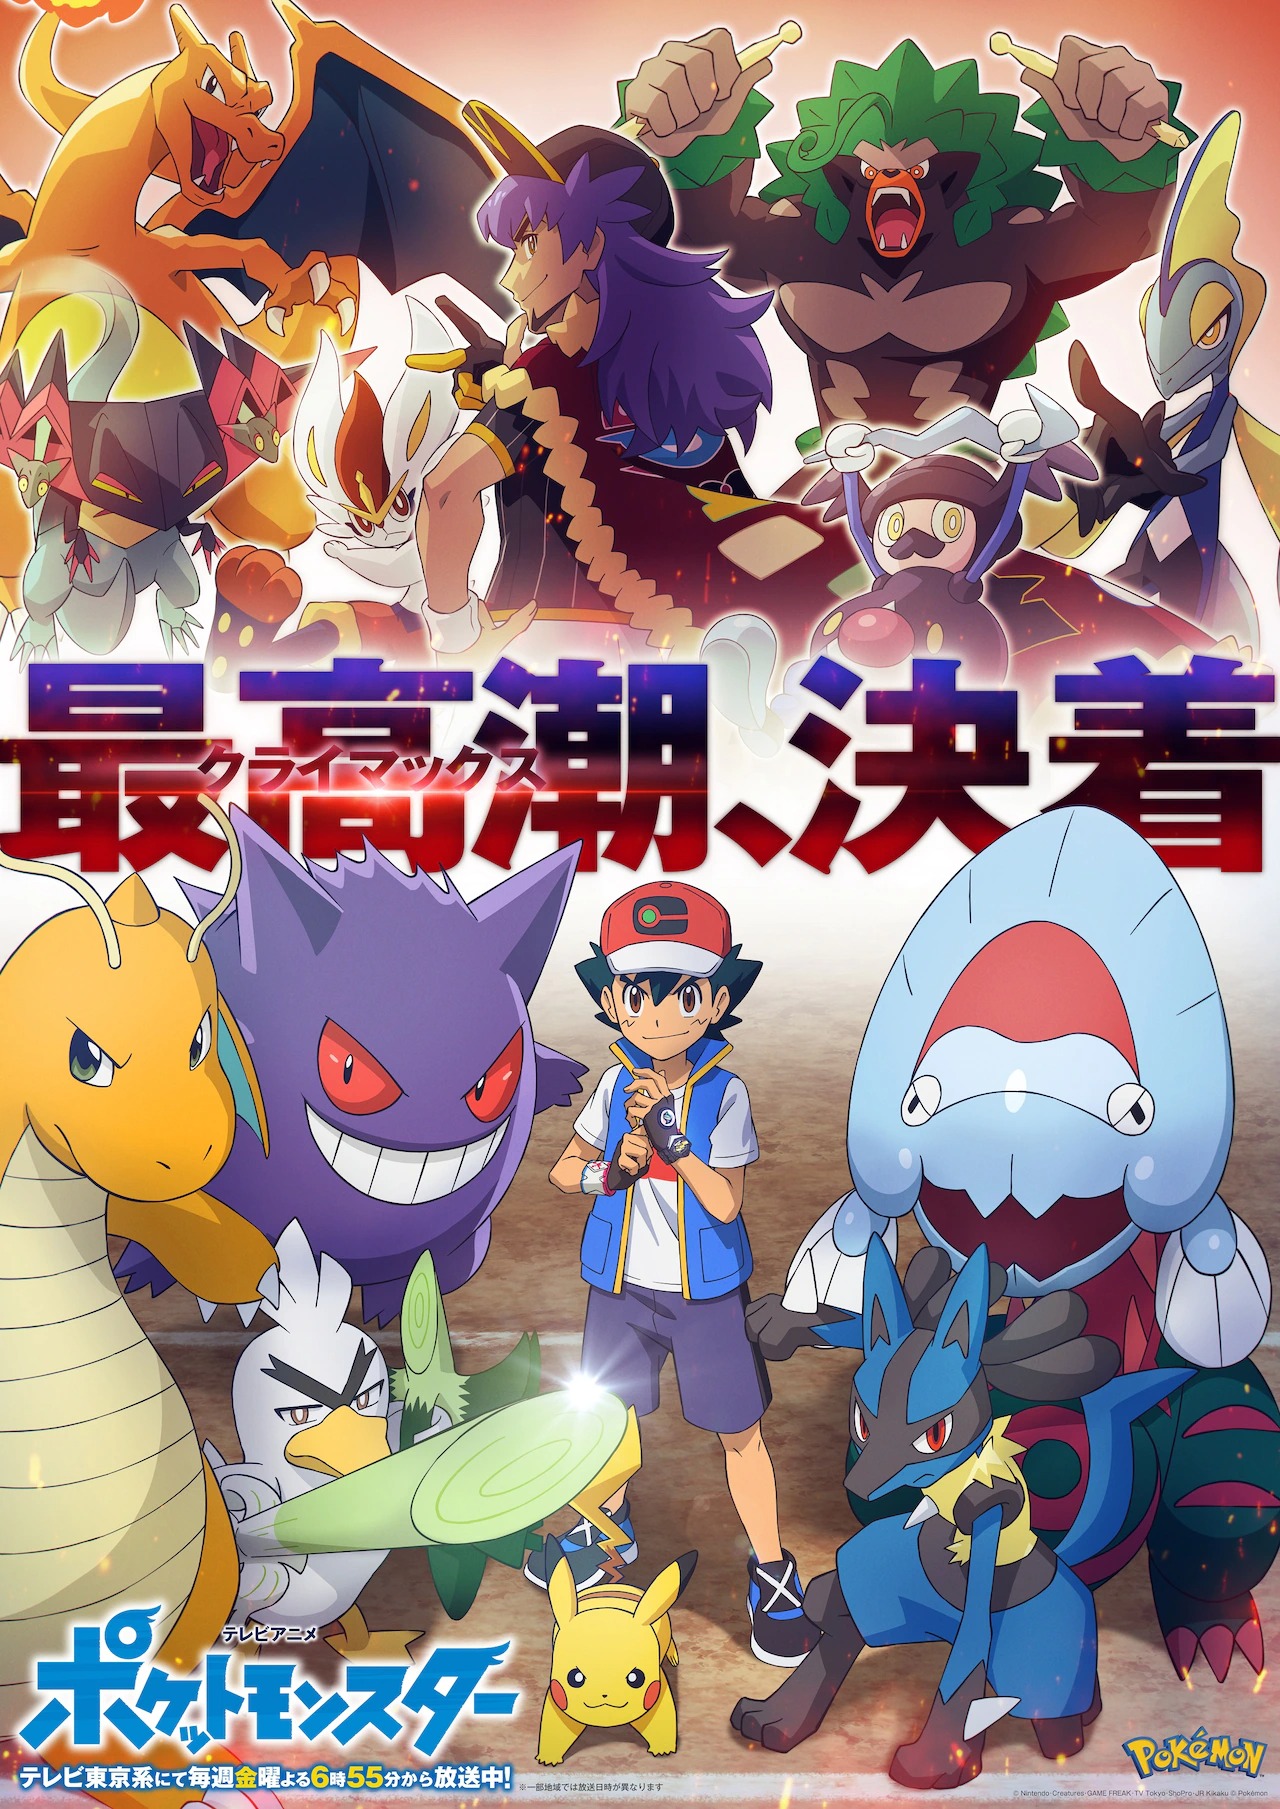 Crunchyroll - New Pokémon TV Anime Trailer, Visual Hypes Up Final World  Champion Battle